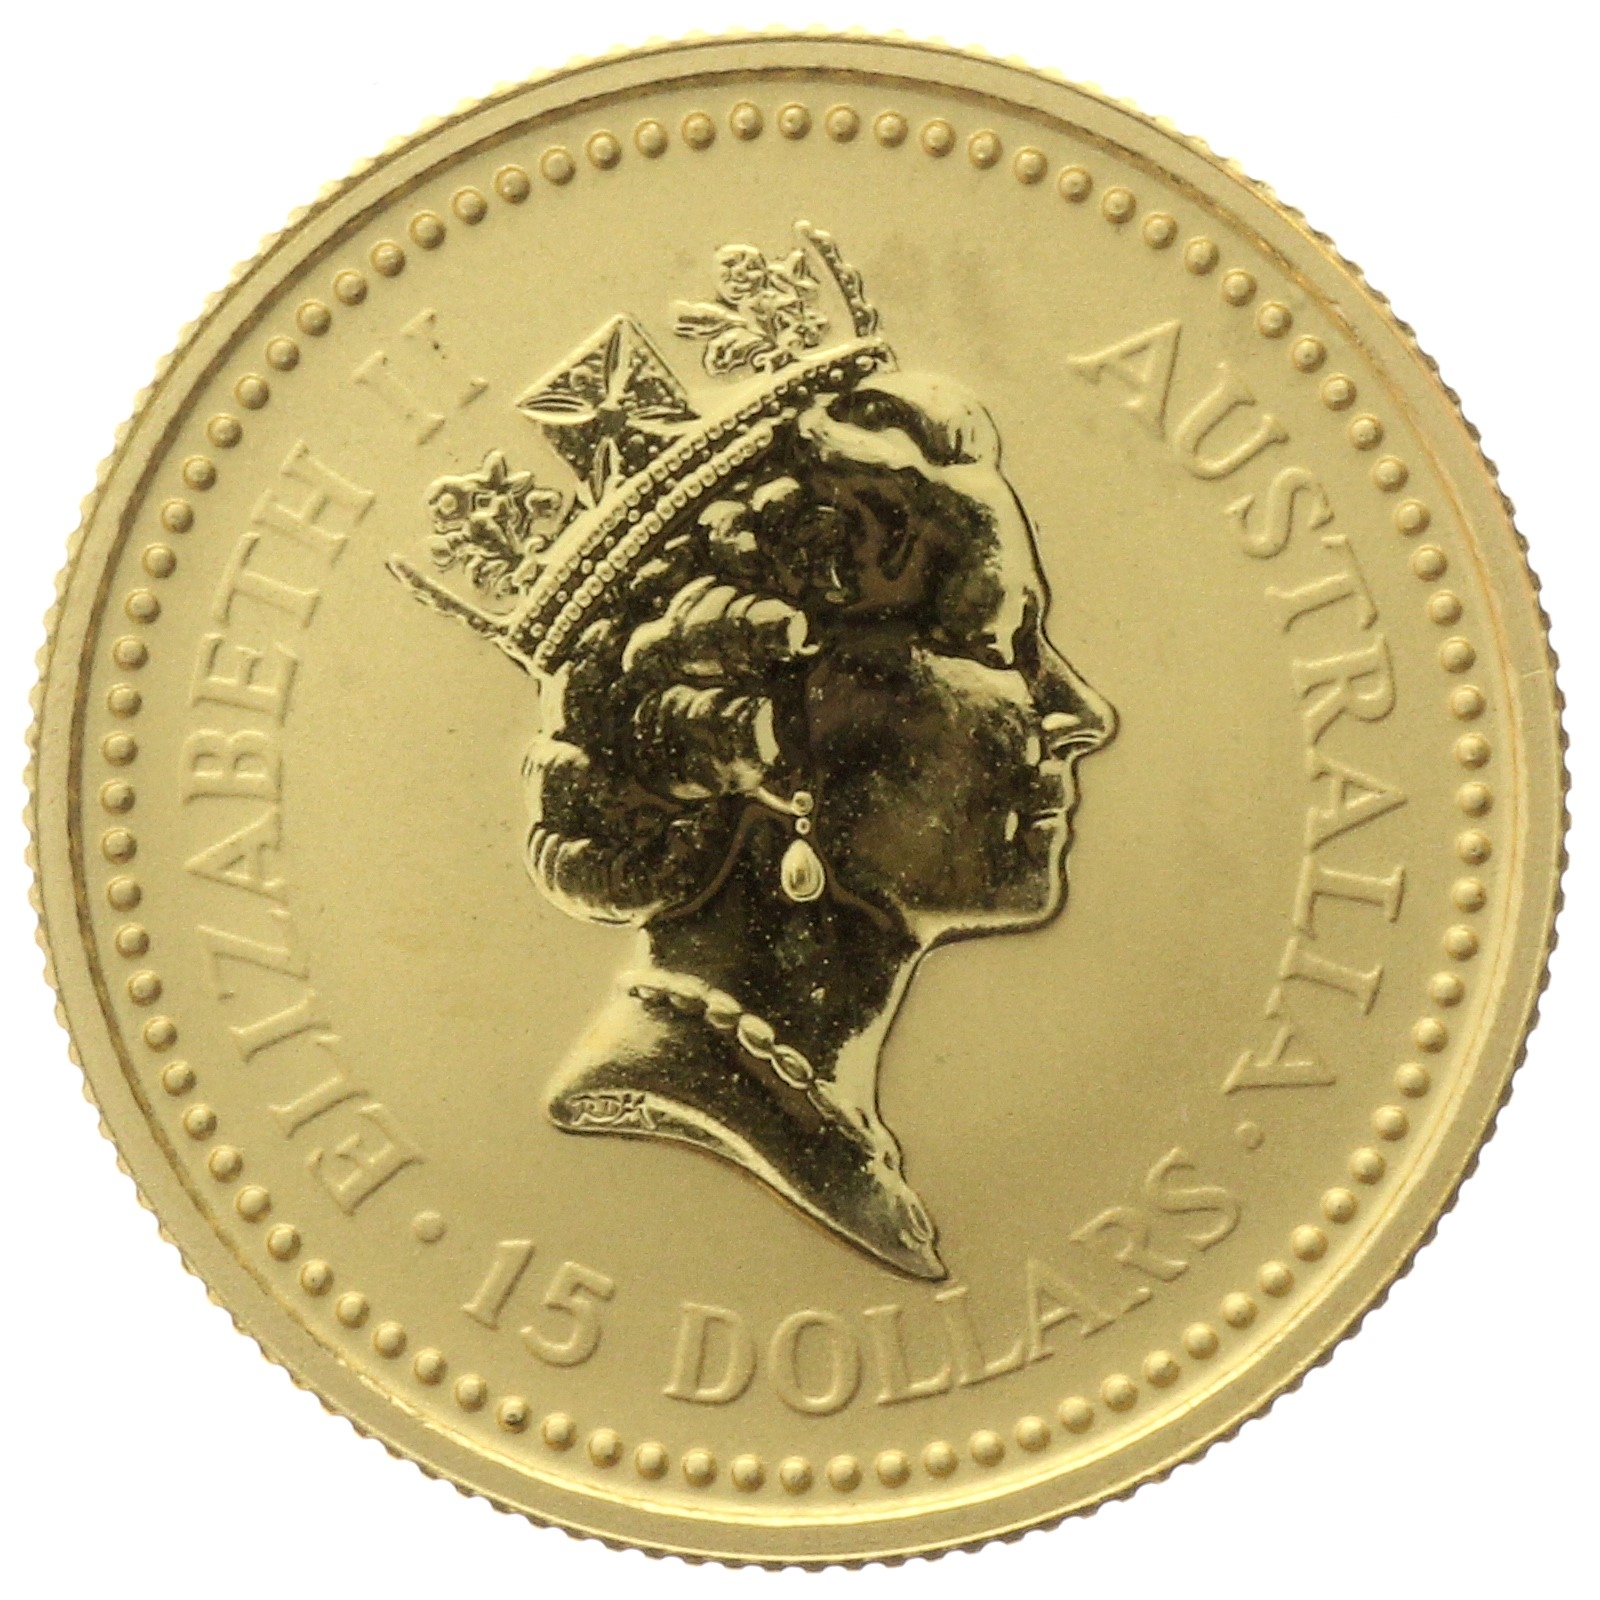 Australia - 15 Dollars - 1990 - Elizabeth II - Australian Kangaroo - 1/10oz